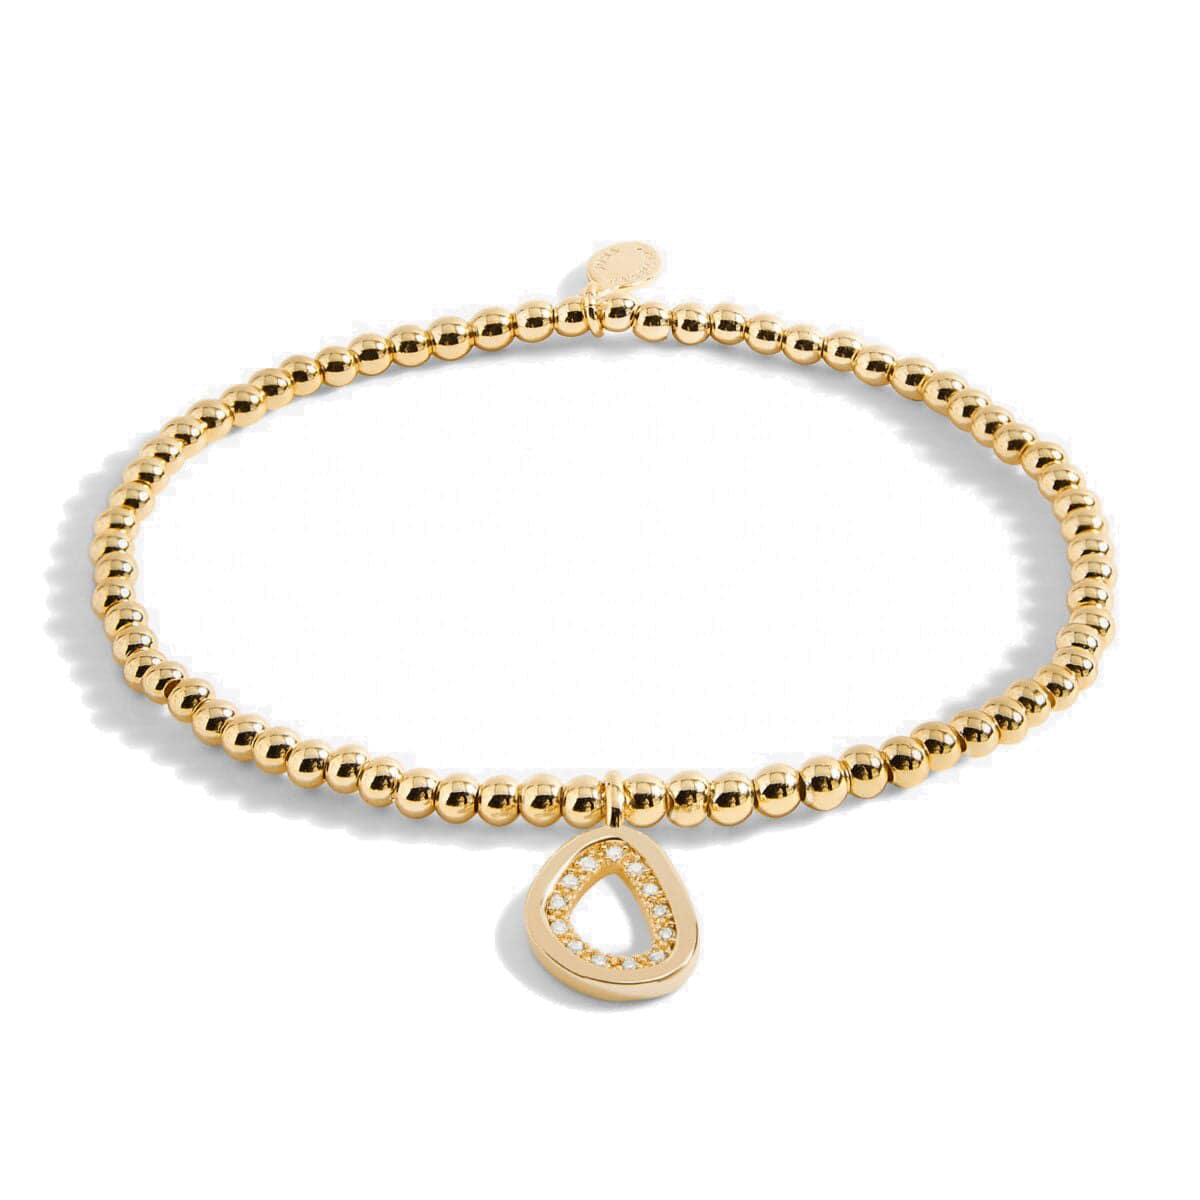 Joma Jewellery Bracelet Joma Jewellery Gold Plated Bracelet - A Little Fearless